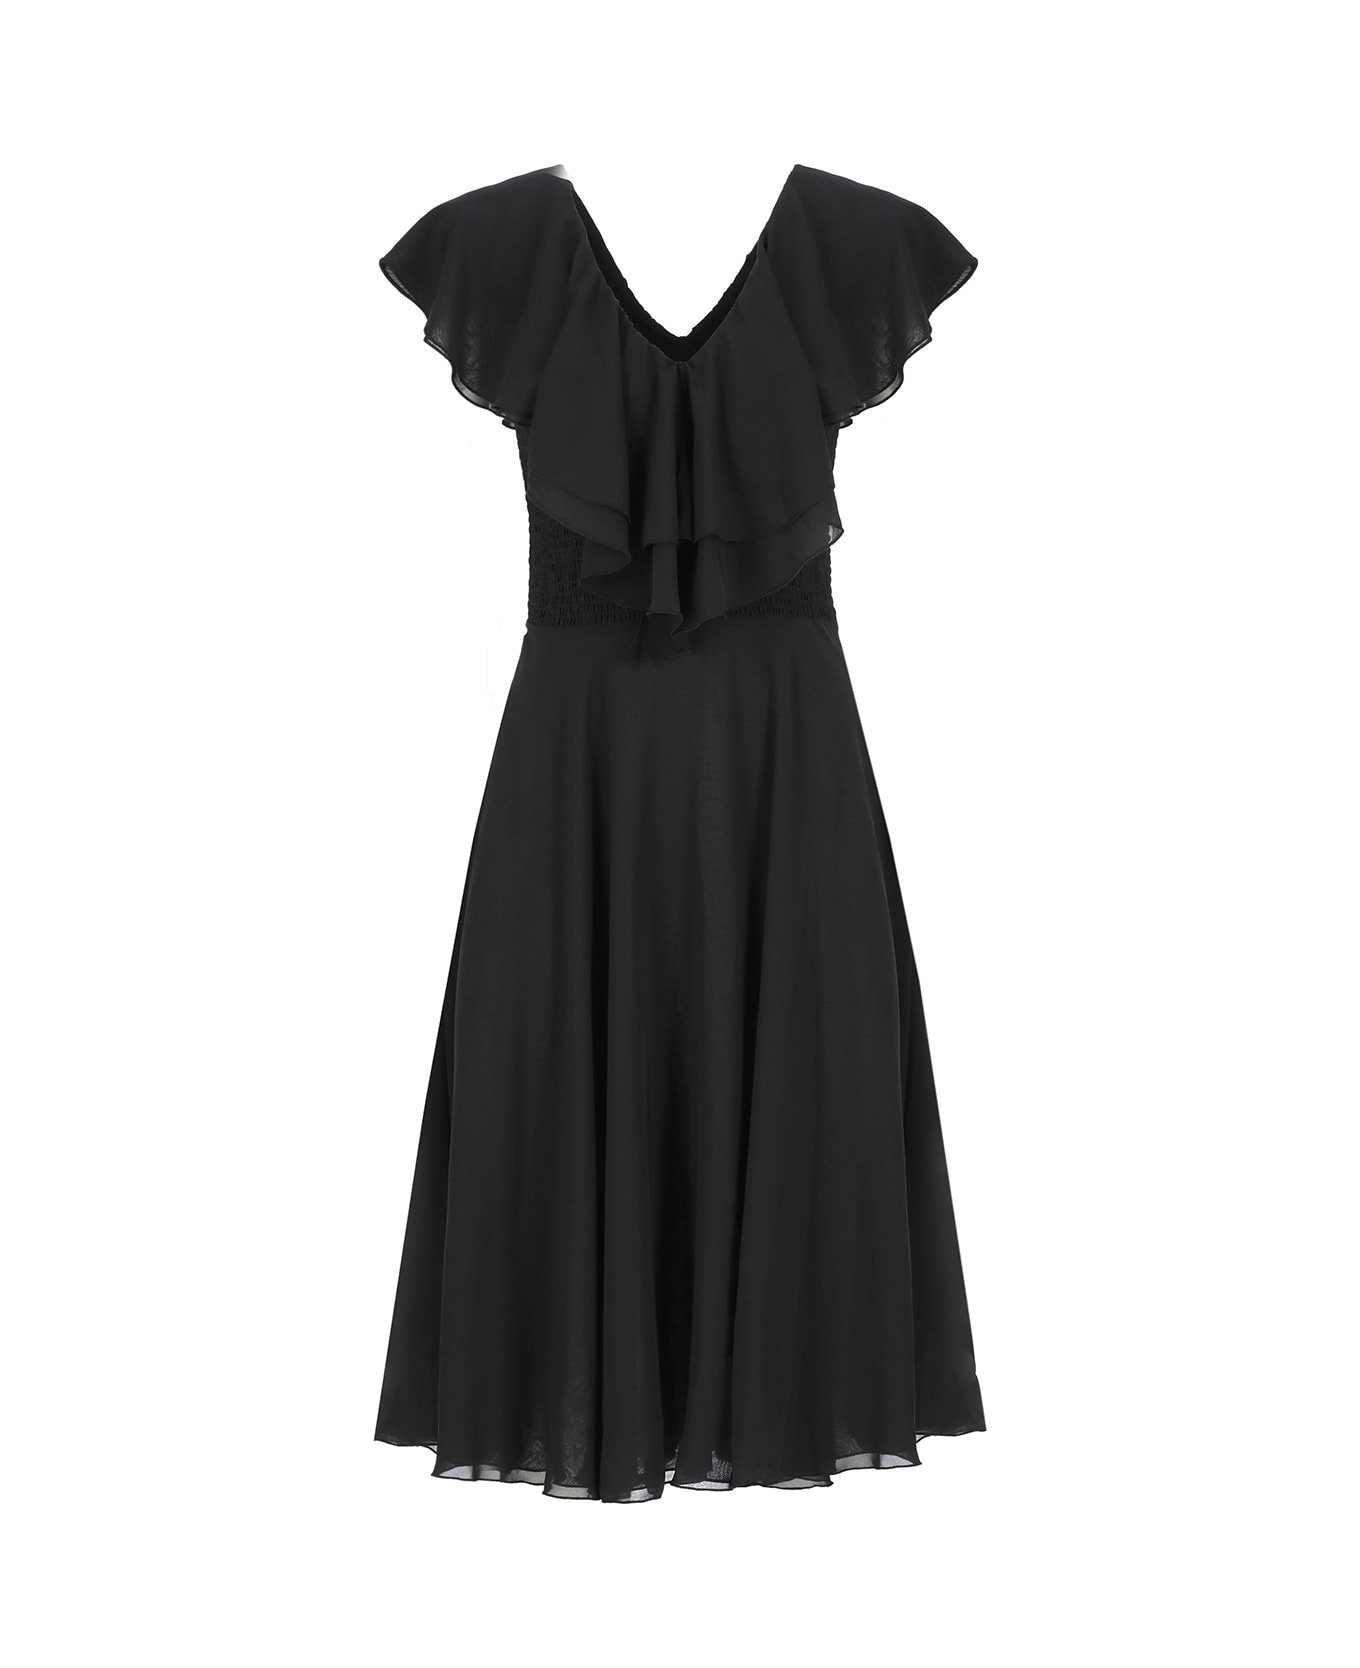 Rotate by Birger Christensen Dress With Ruffles - Black